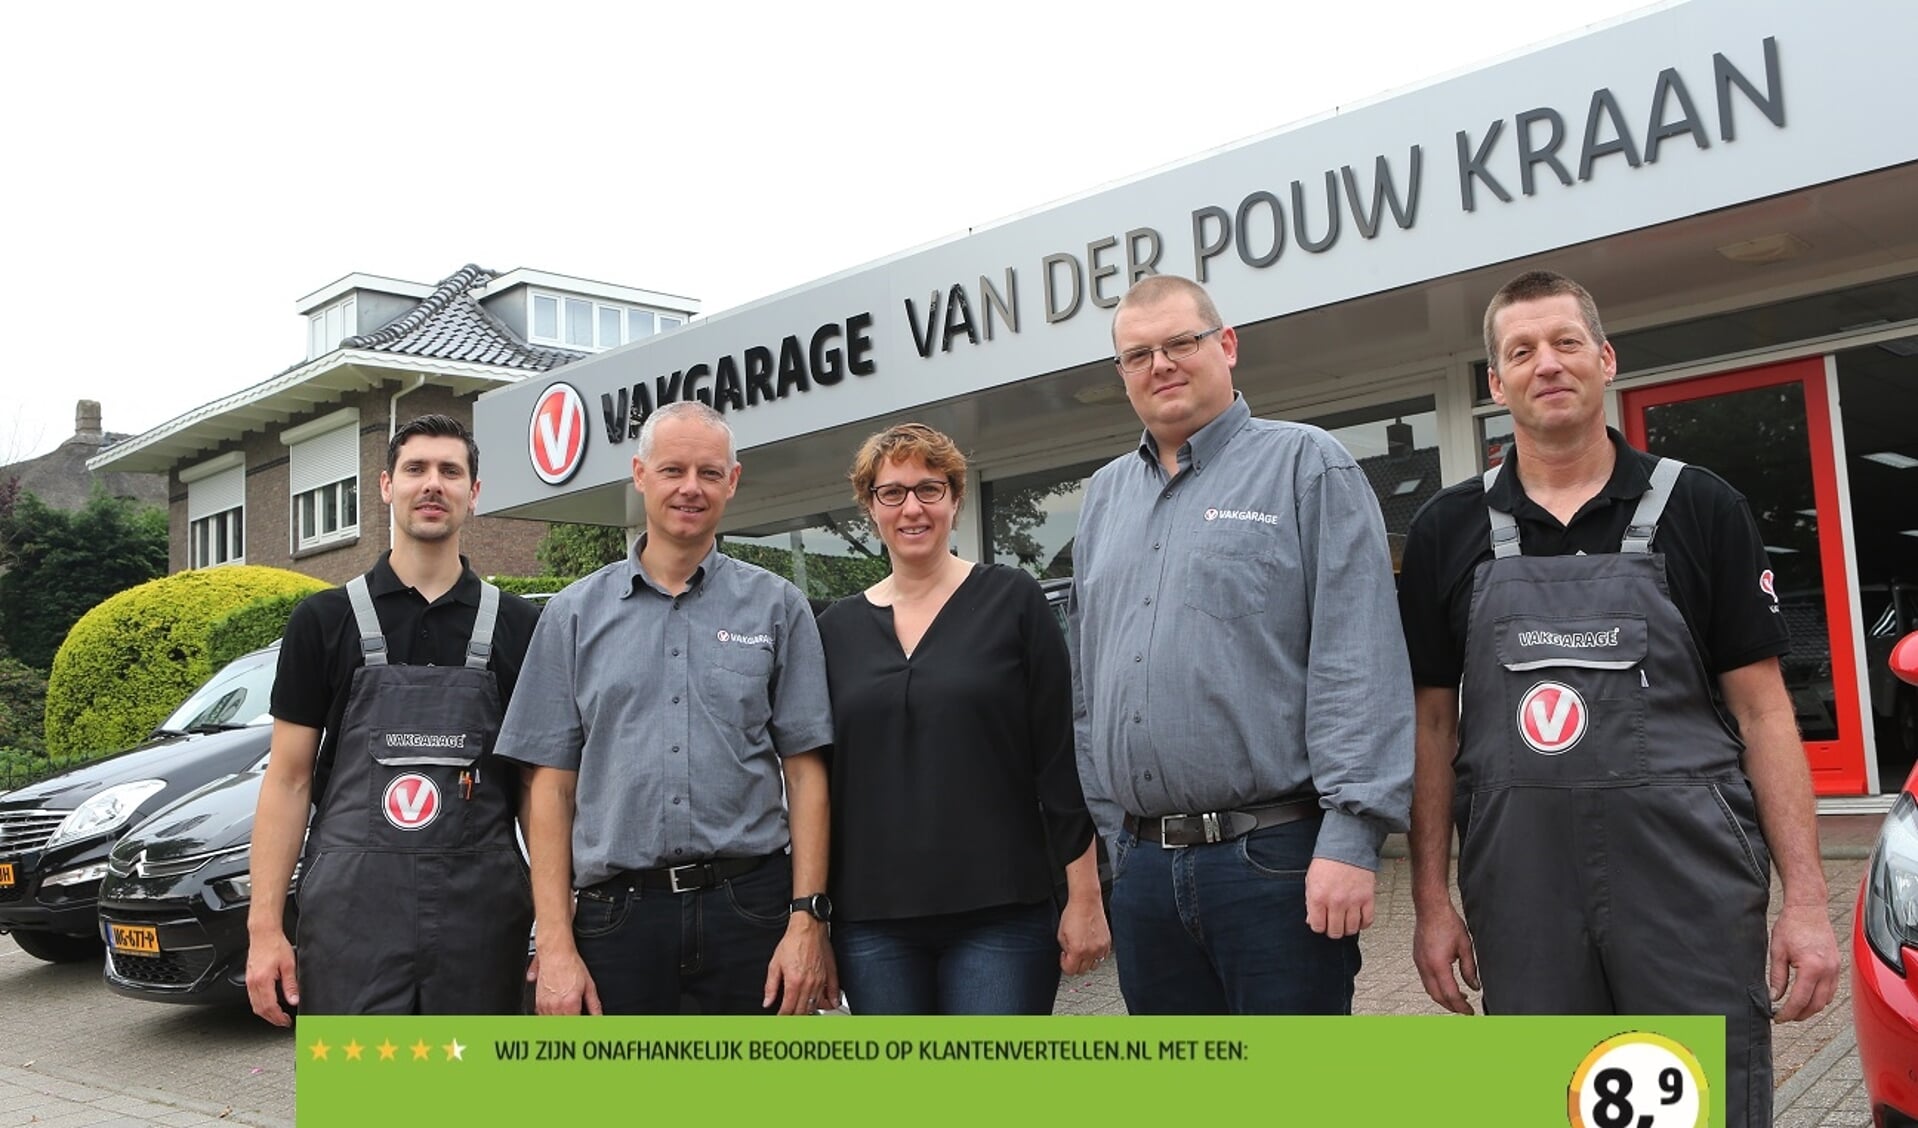 Het team van Vakgarage Van der Pouw Kraan. V.l.n.r.: Rutger, Marco, Gabriella, Daniël en Sylvio.